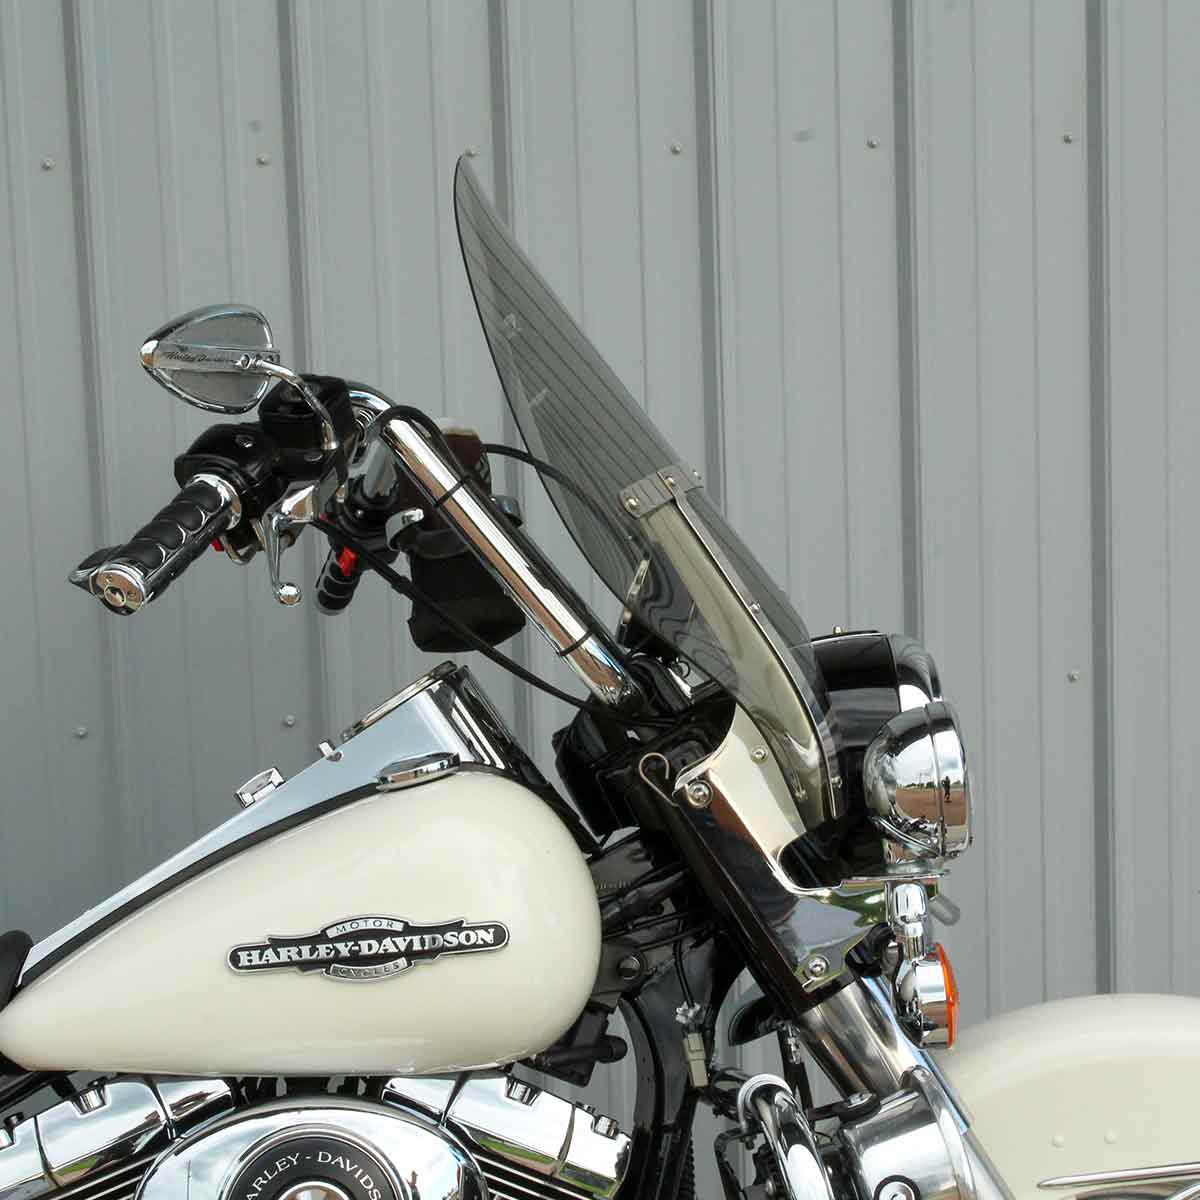 16.5" Tint Billboard Flare™ Windshield for Harley-Davidson® Road King motorcycle models(16.5" Tint on Road King Model)